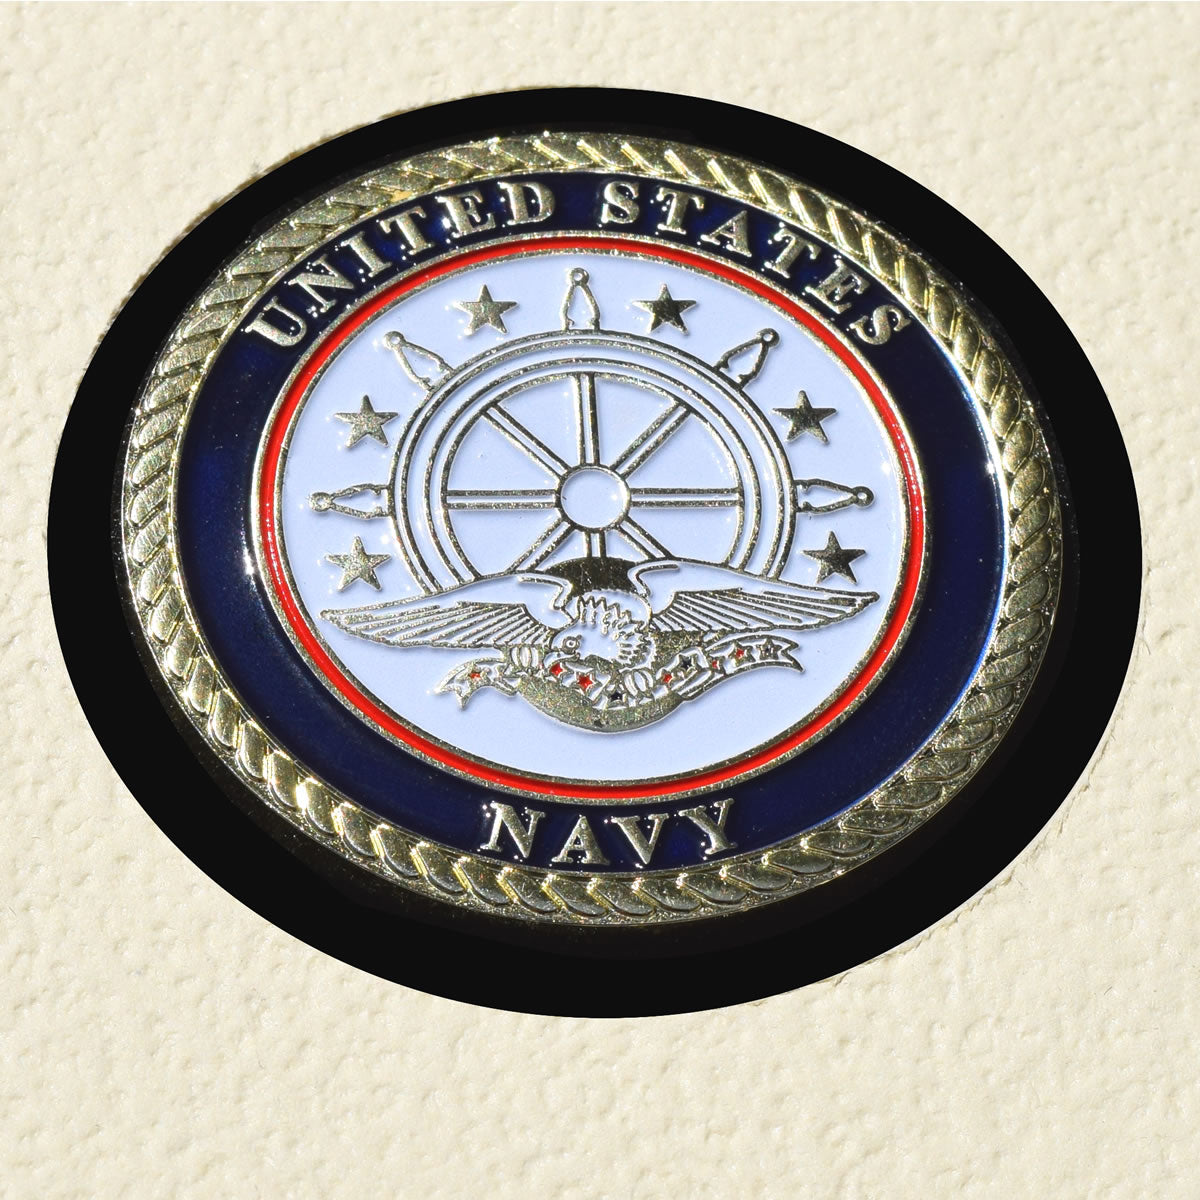 USS THORN DD-988 Detailed Coin